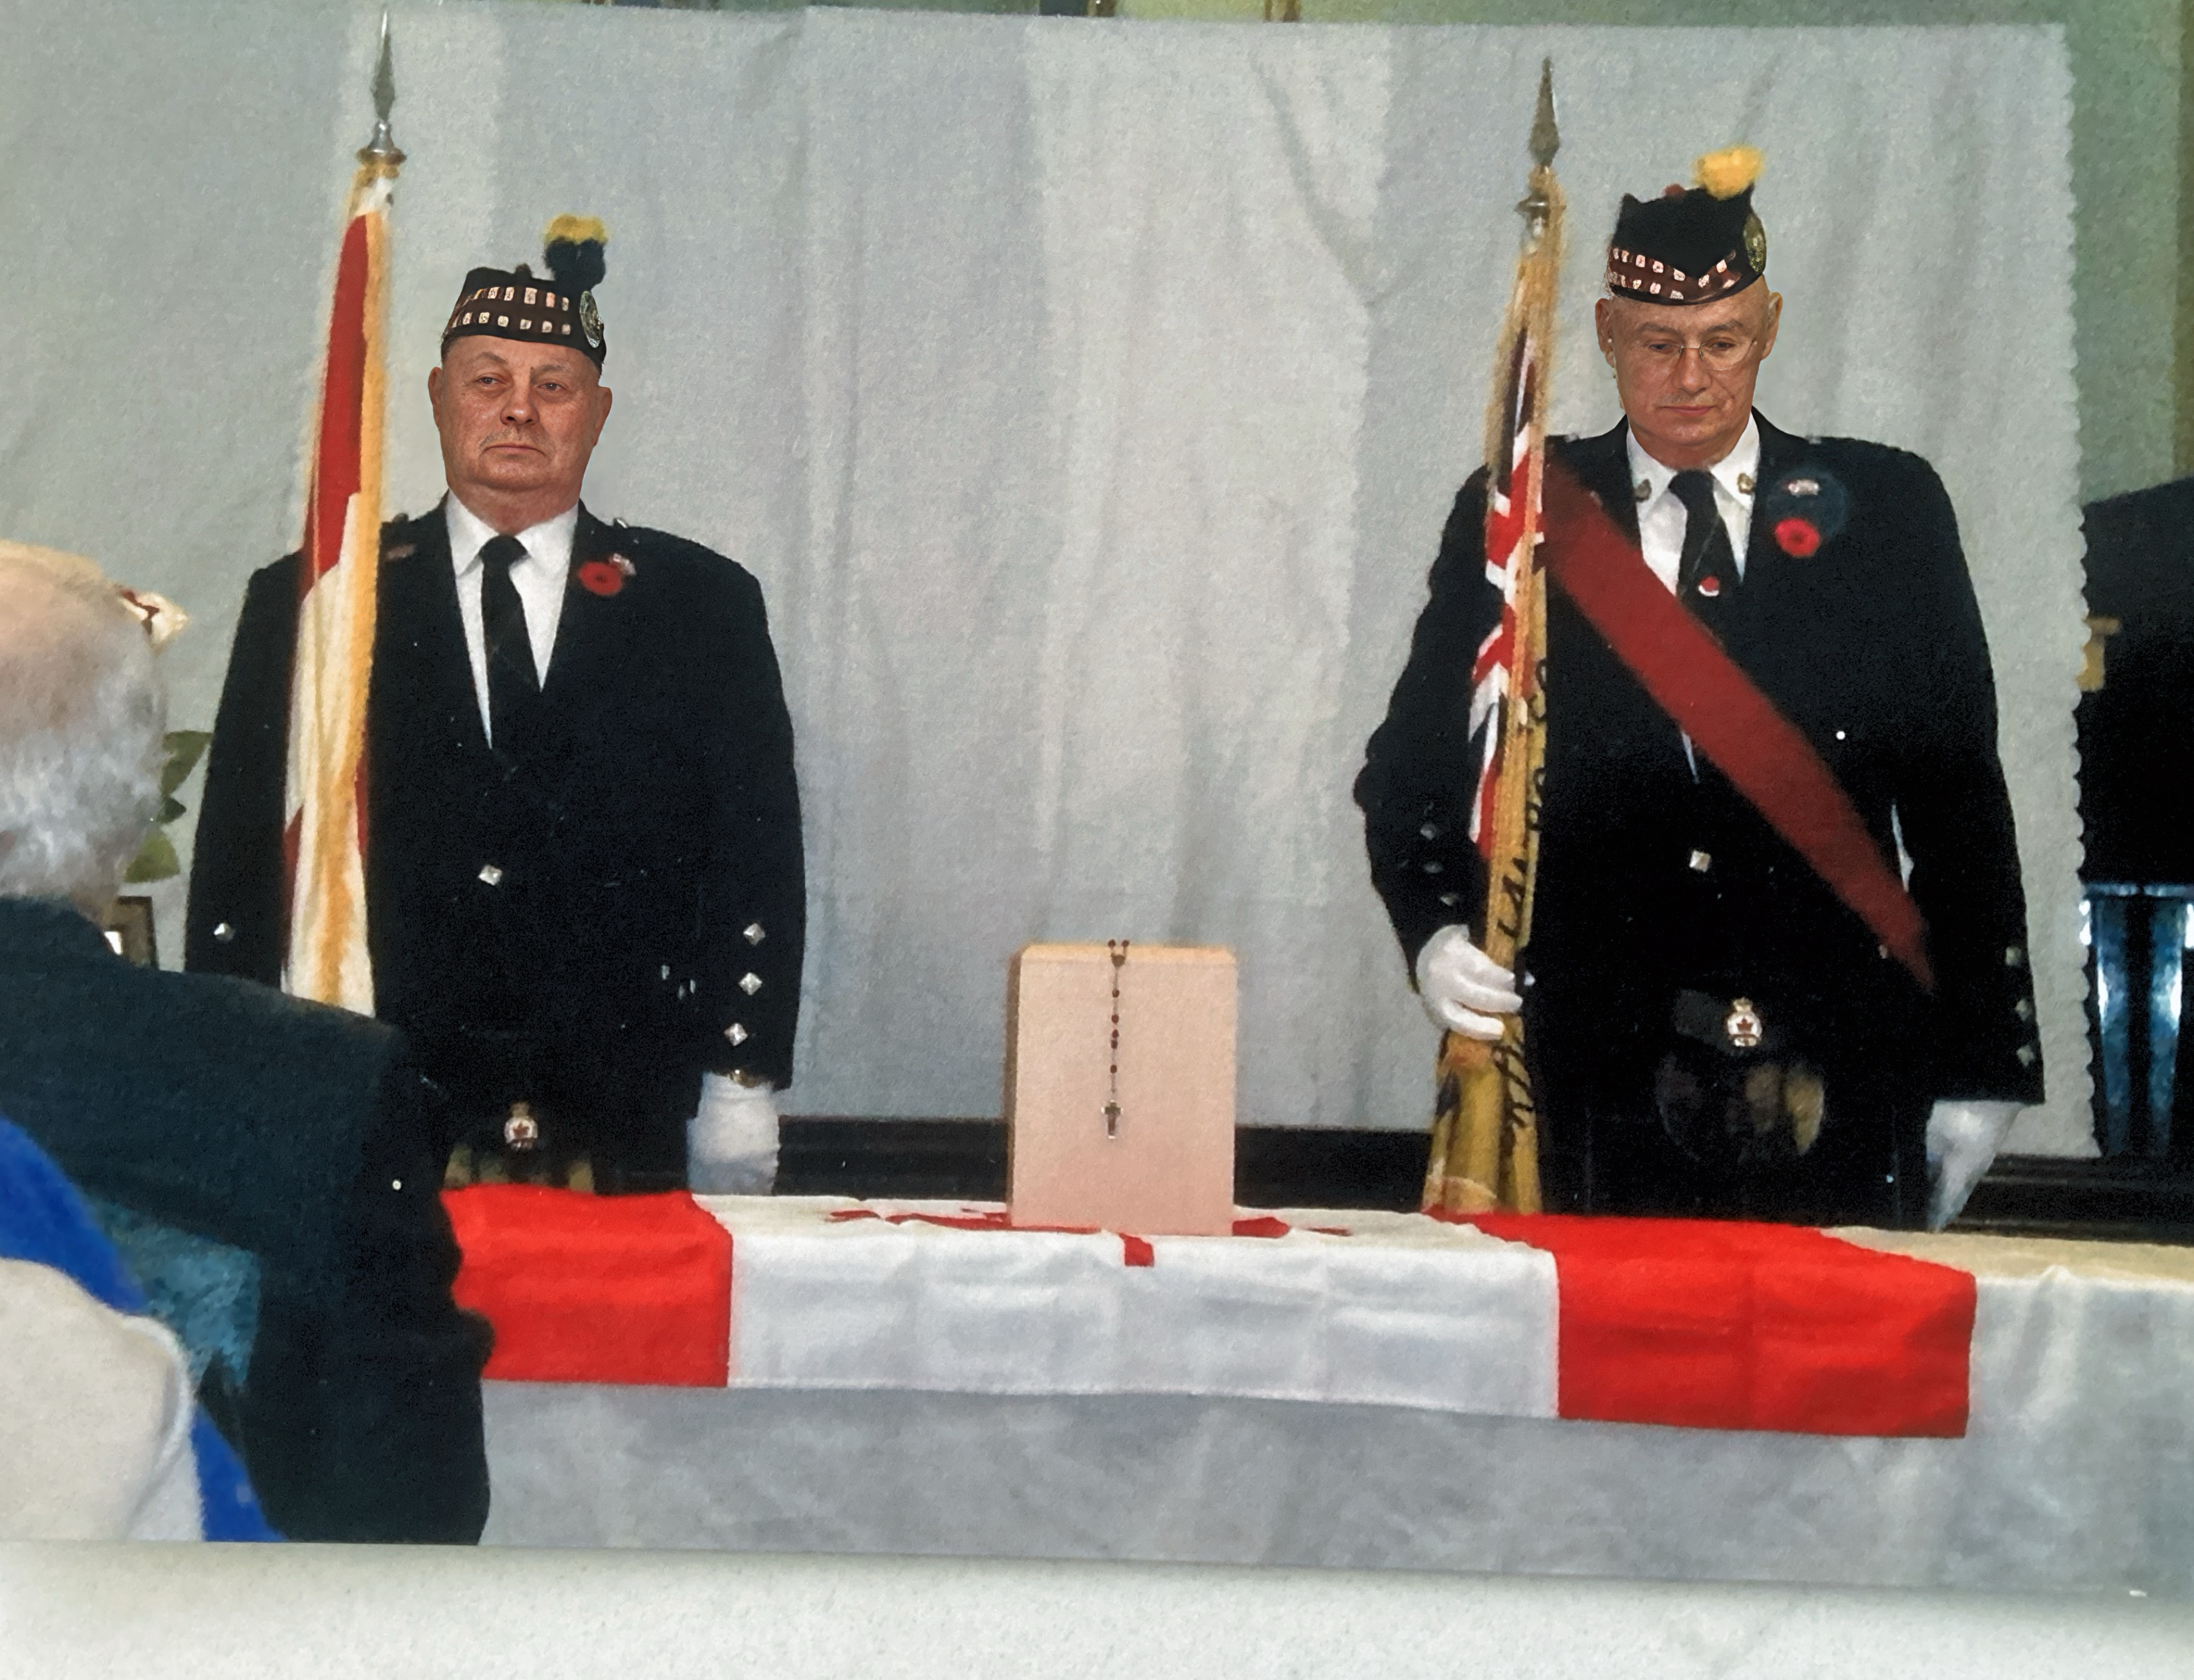 Honour guard for Dad, memorial March 17th, 2012